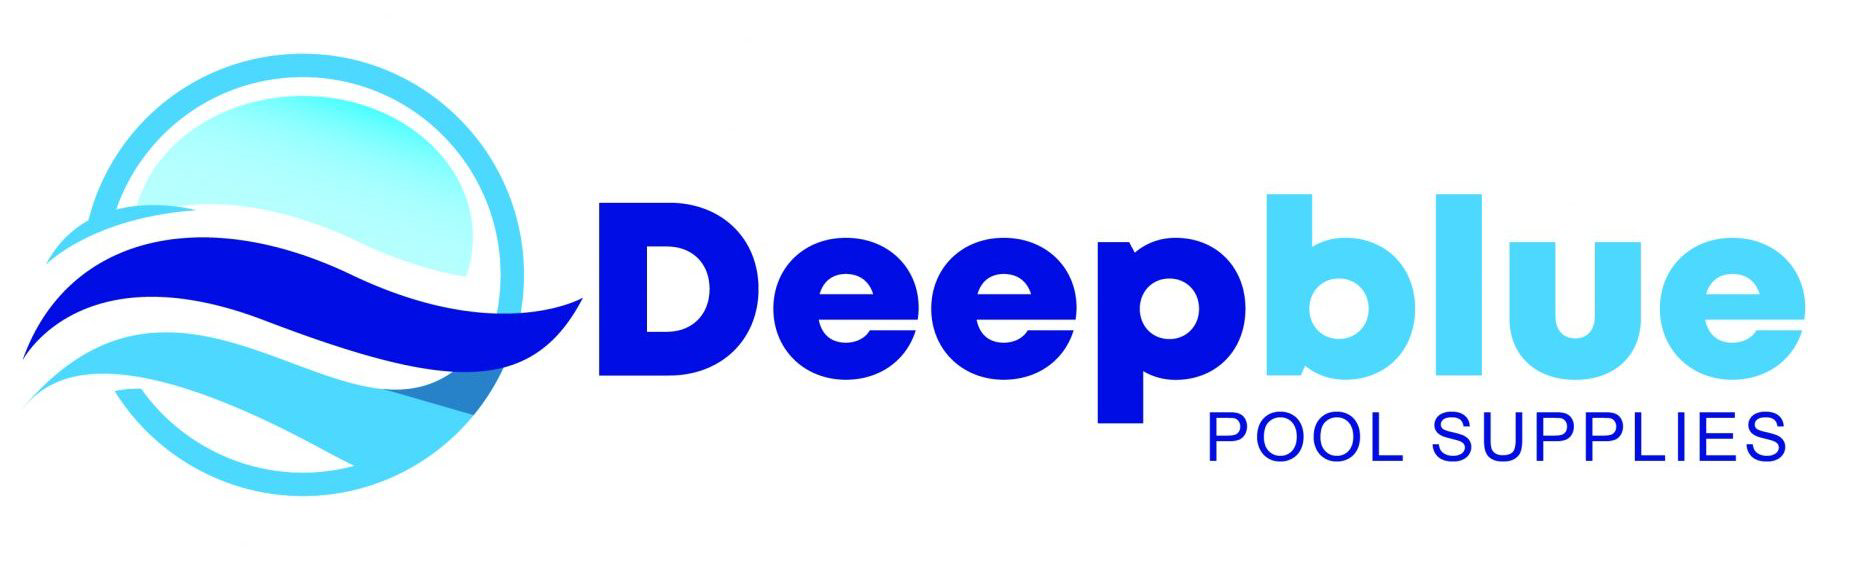 Deep Blue Pool Supplies